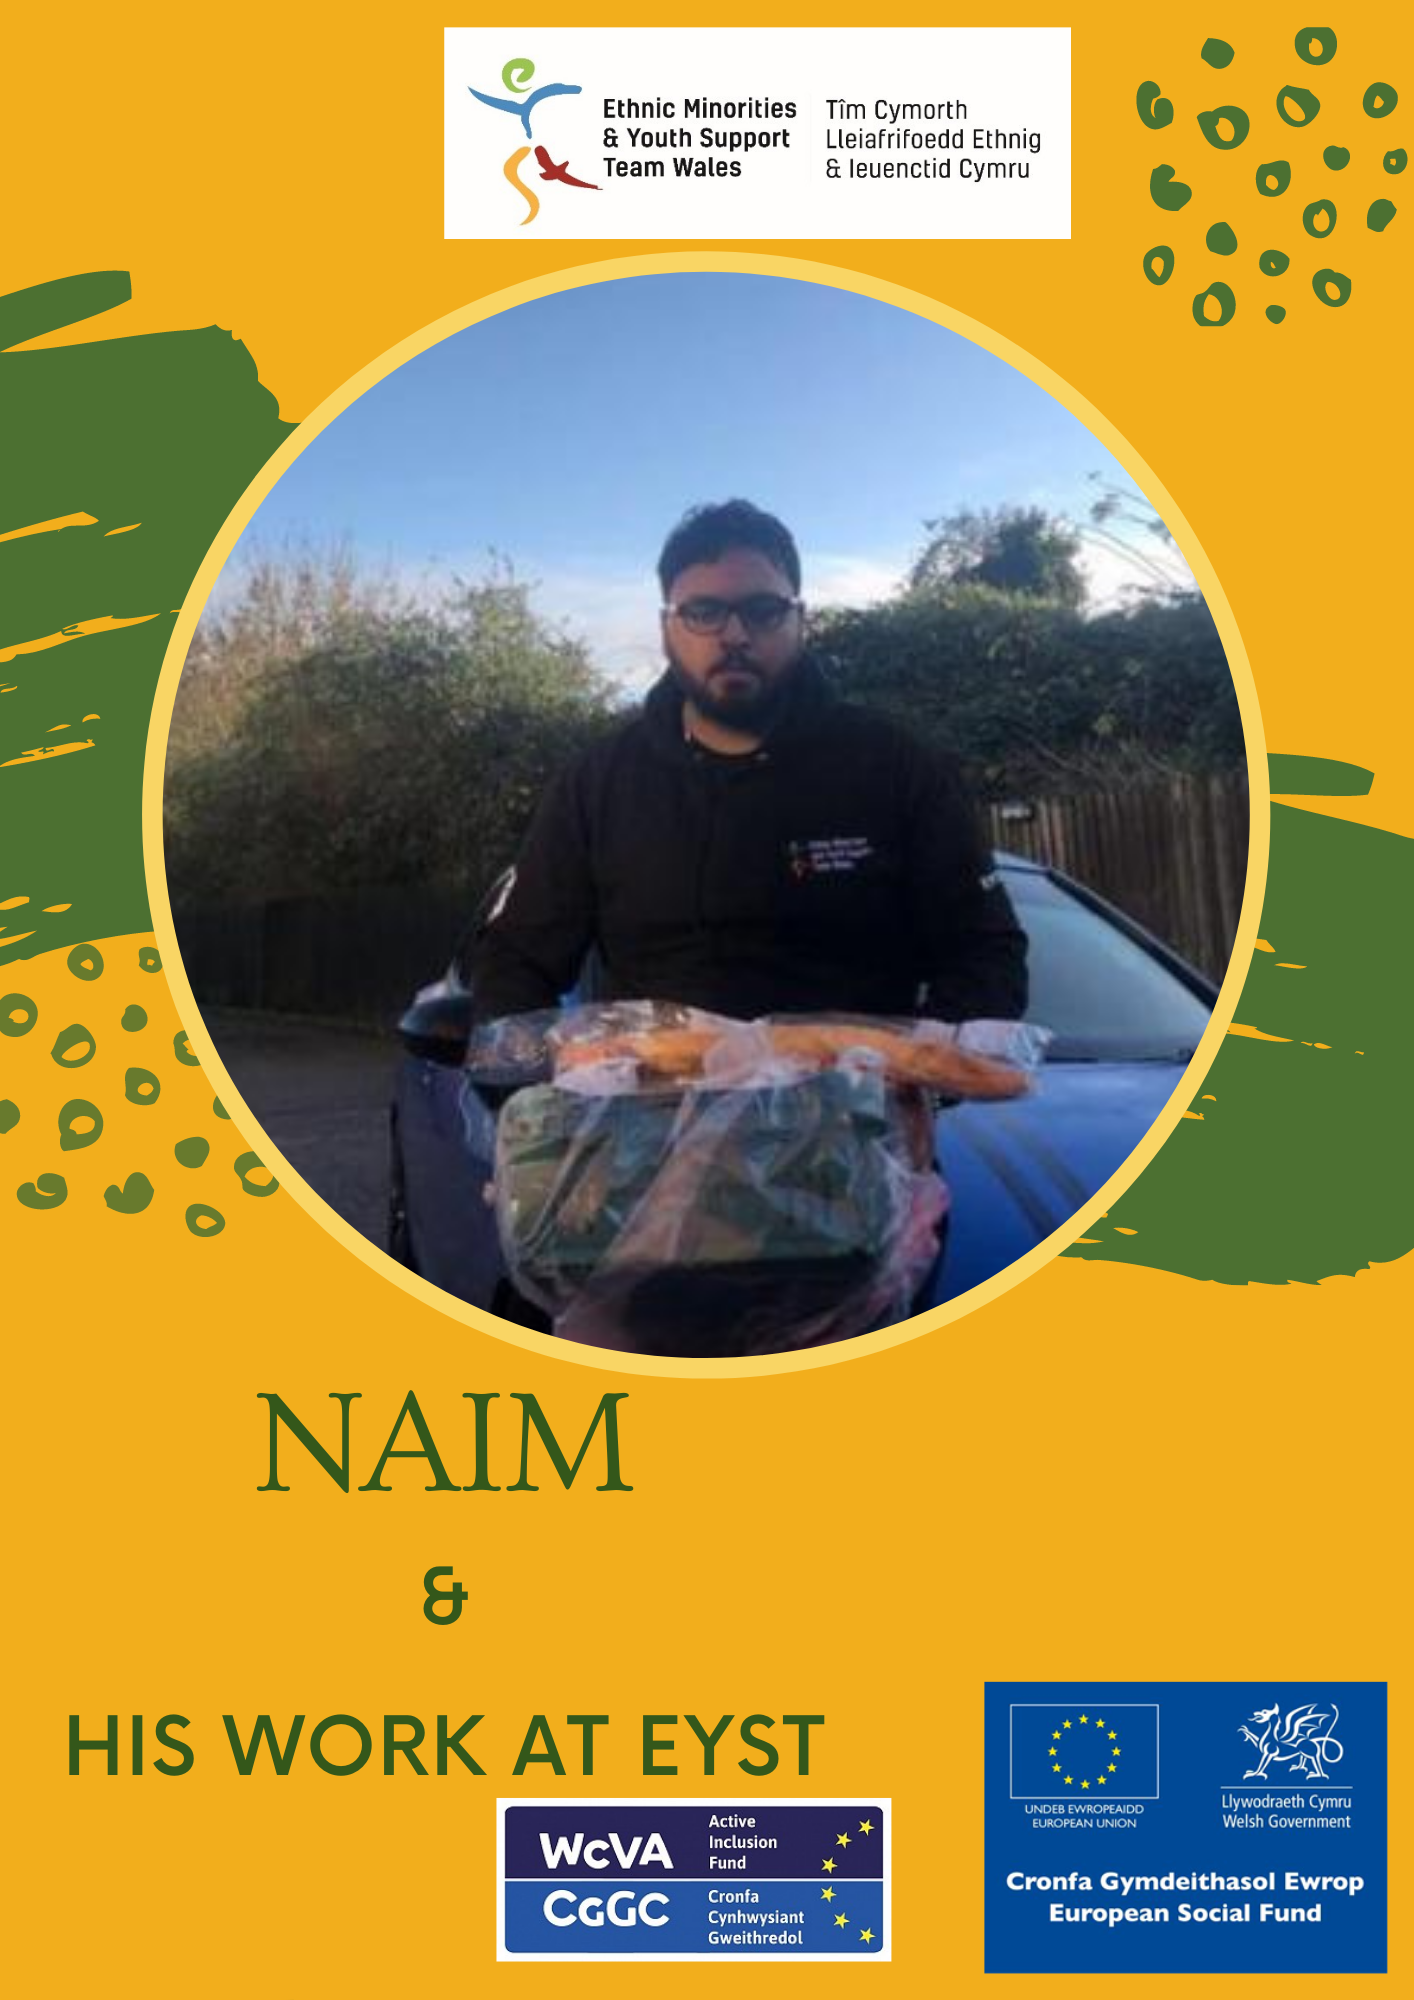 Naim's role at EYST